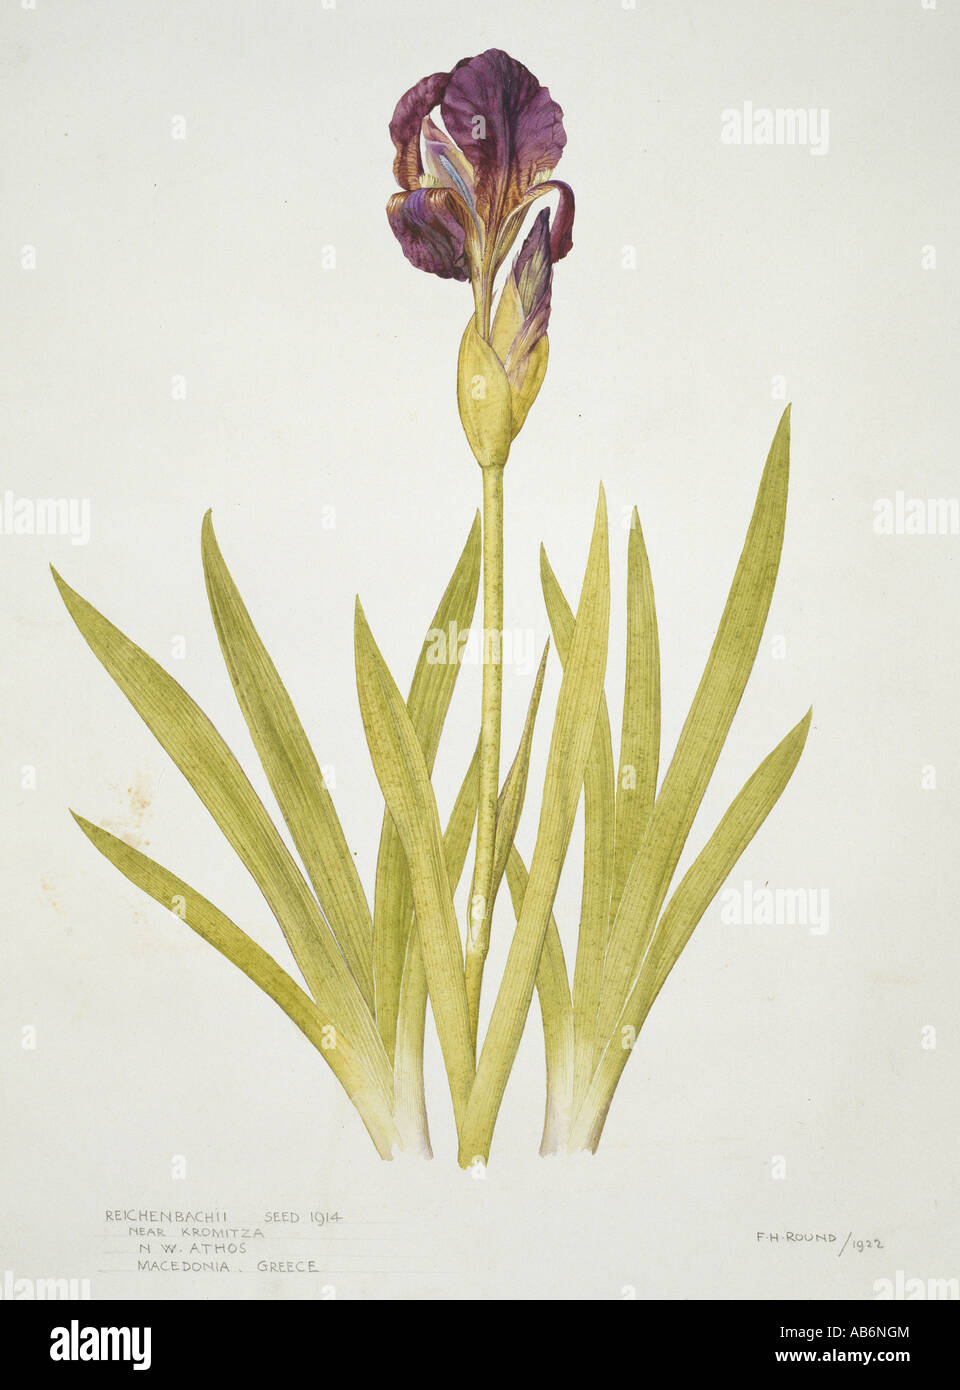 Iris reichenbachii small bearded alpine Iris Stock Photo